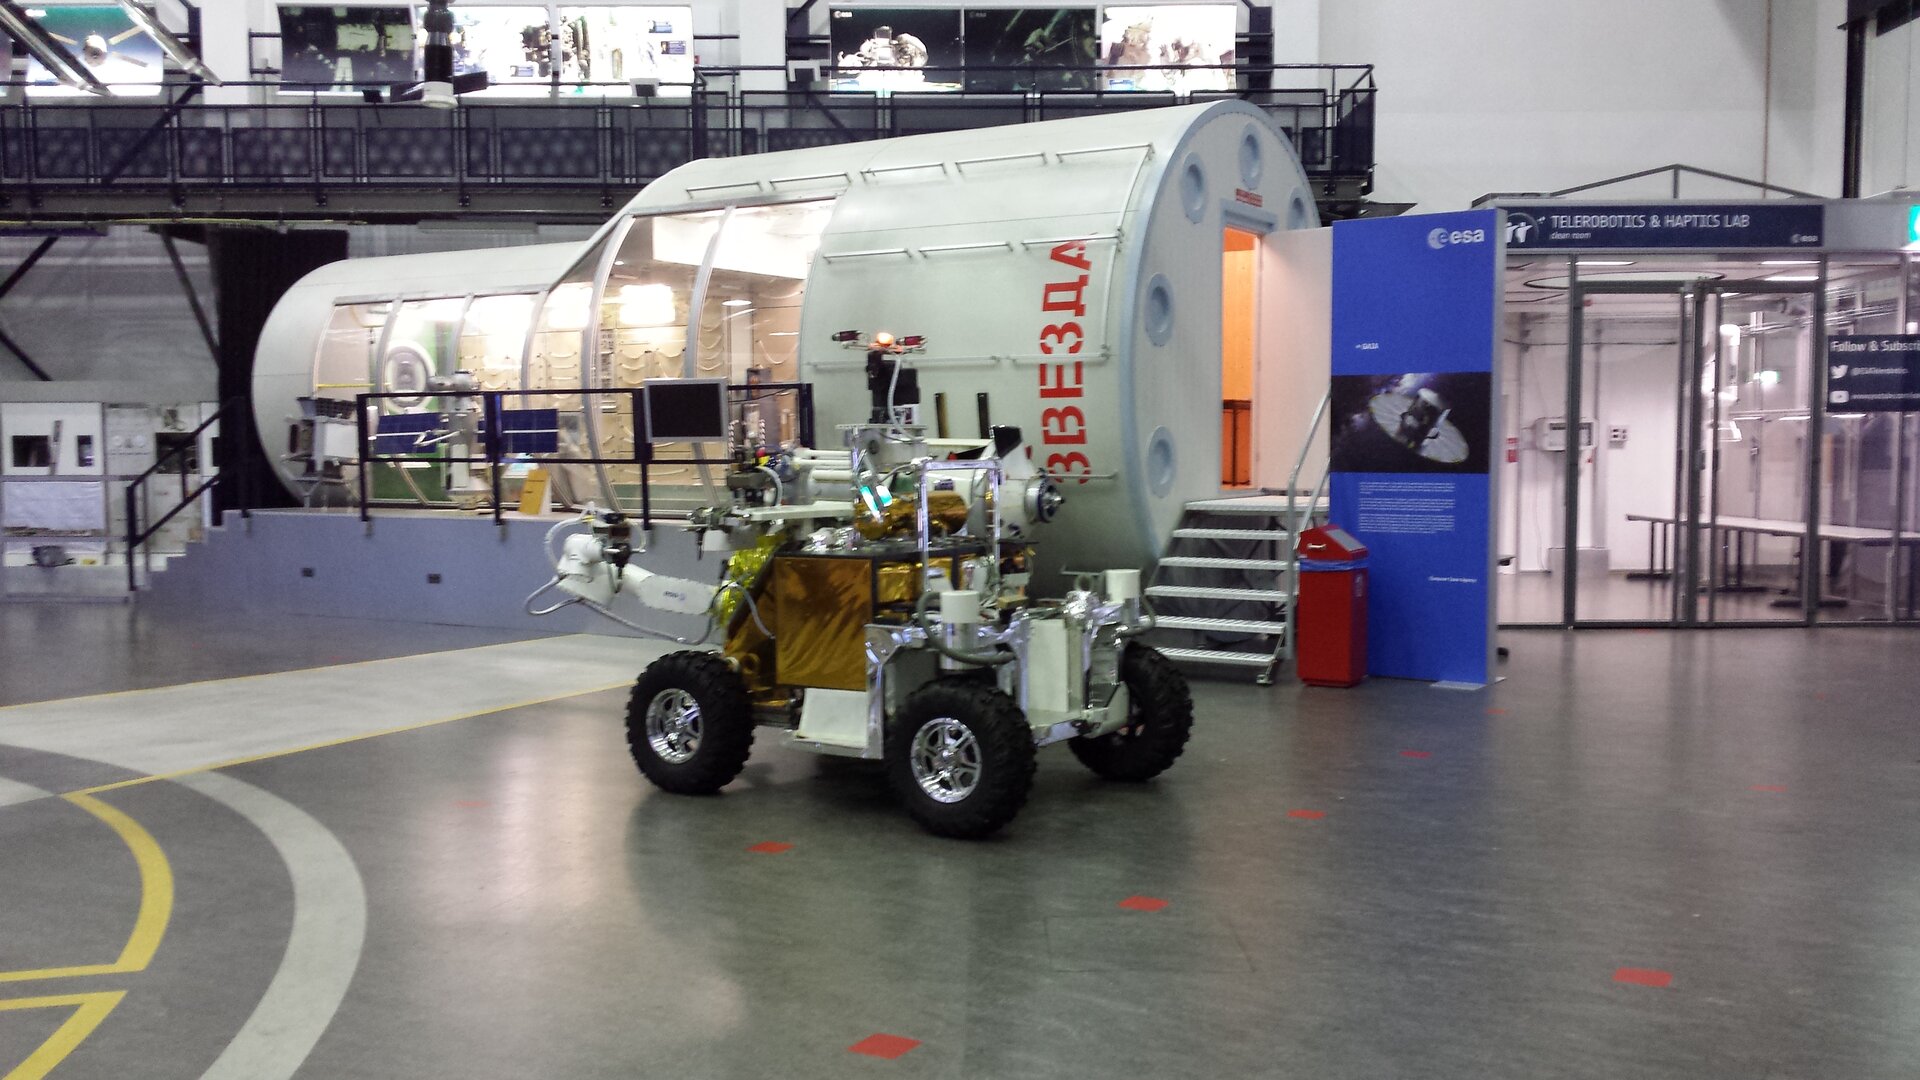 Rover under astronaut control